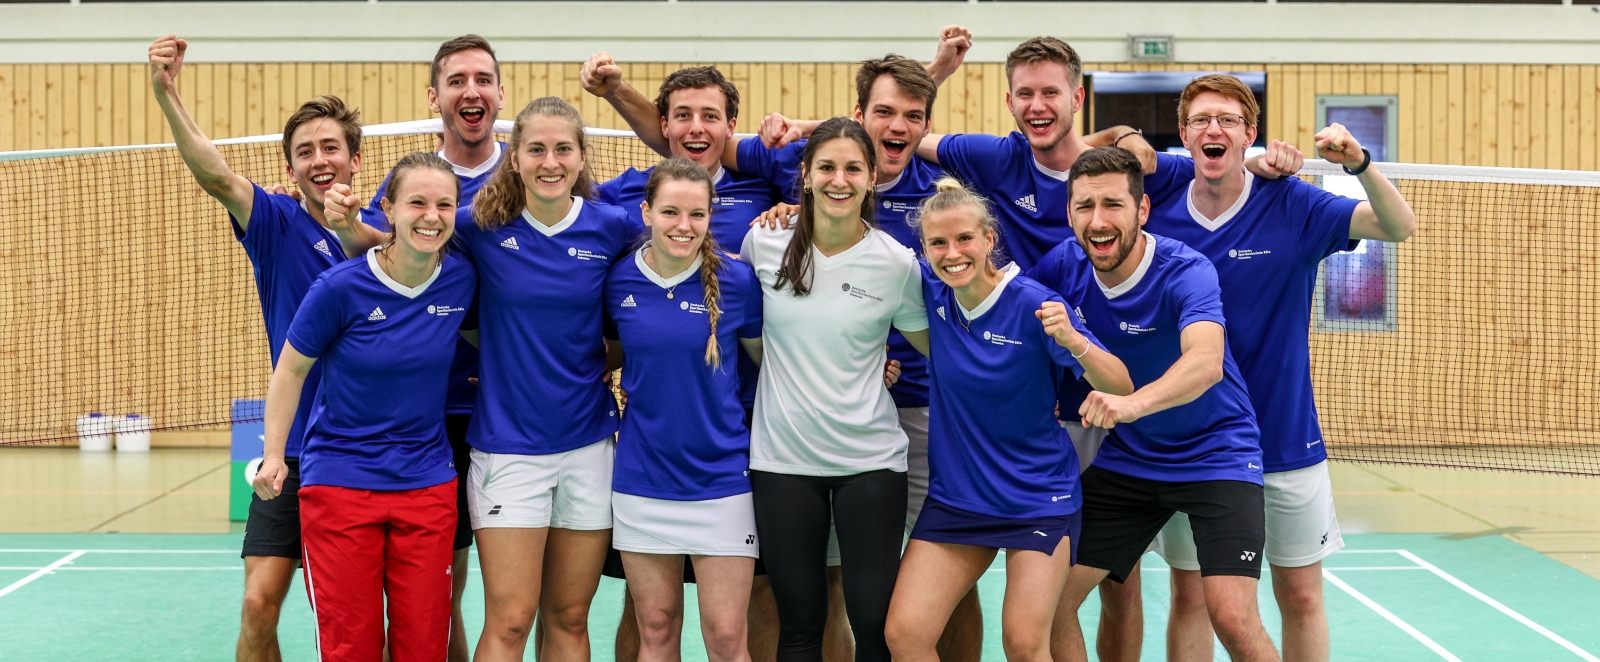 Gruppenbild des Badminton-Sieger-Teams.